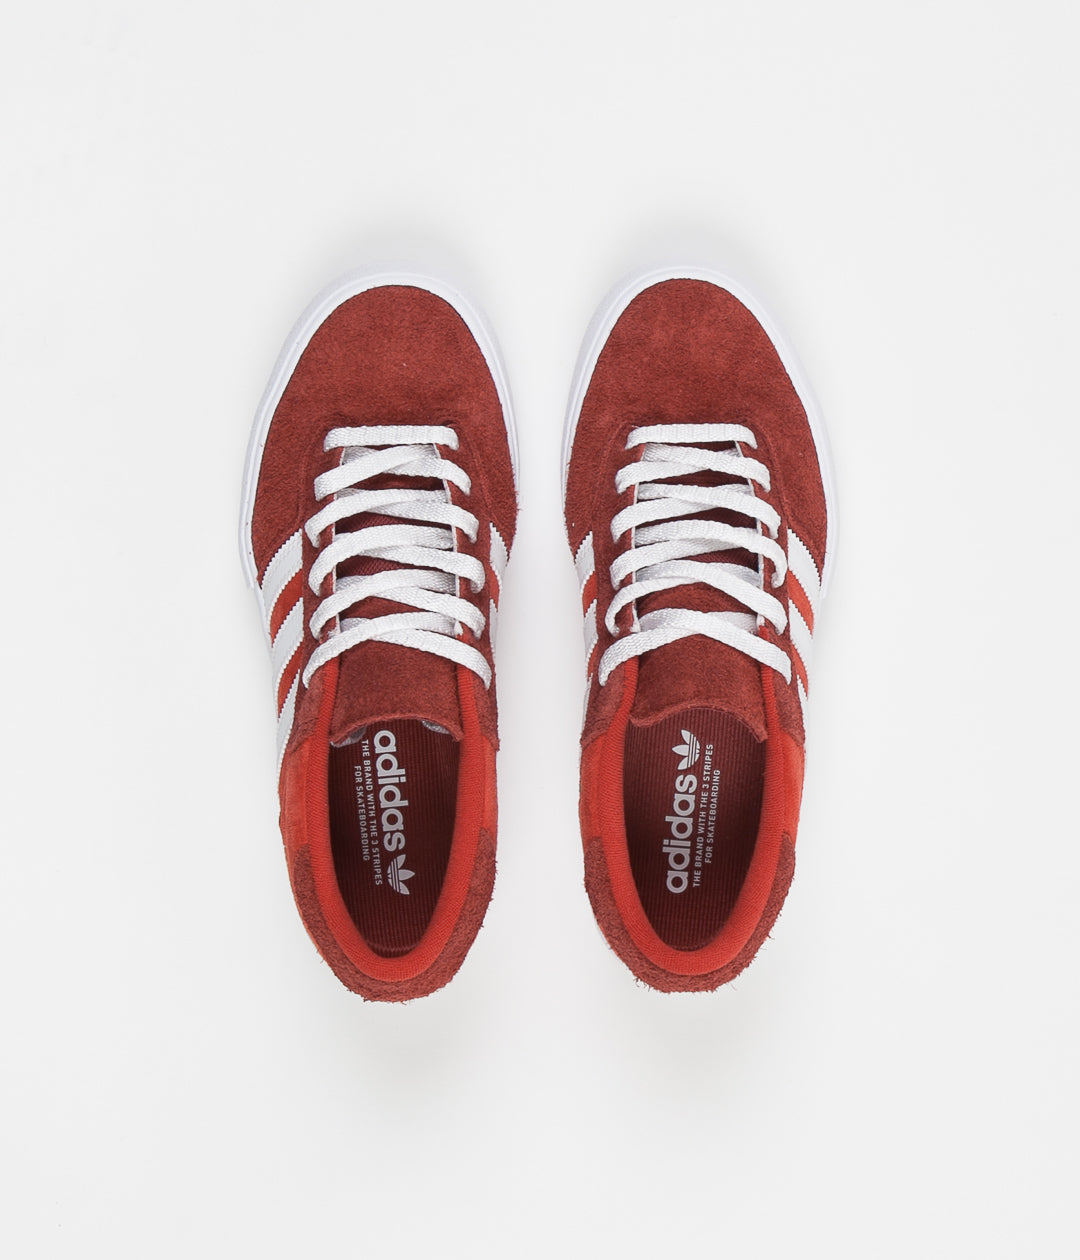 adidas matchbreak super red